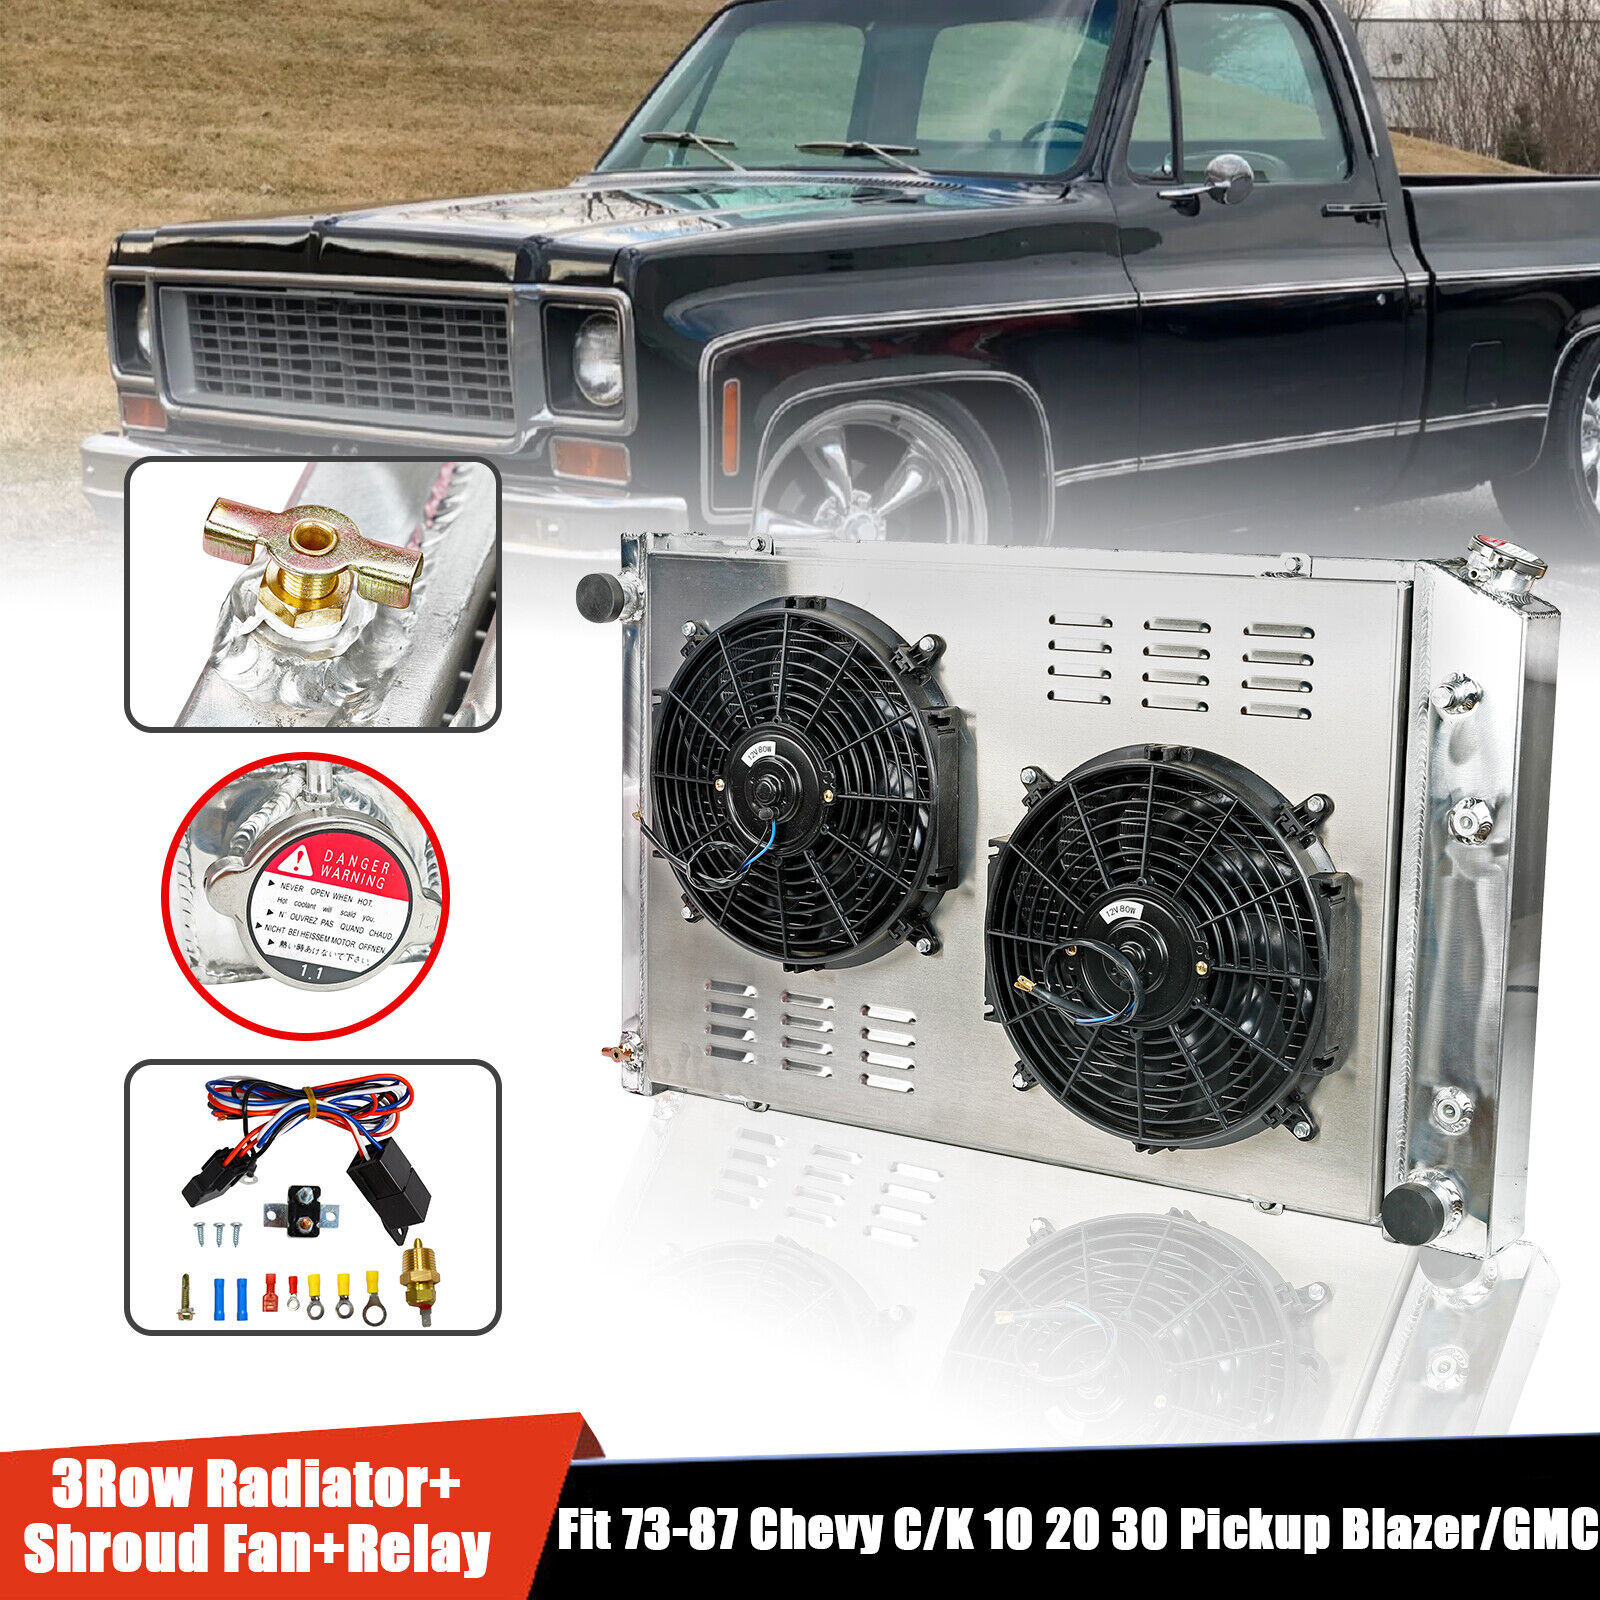 Core 3Row Radiator+Shroud Fan Relay Fit 73-87 Chevy C/K Series Pickup Blazer/GMC